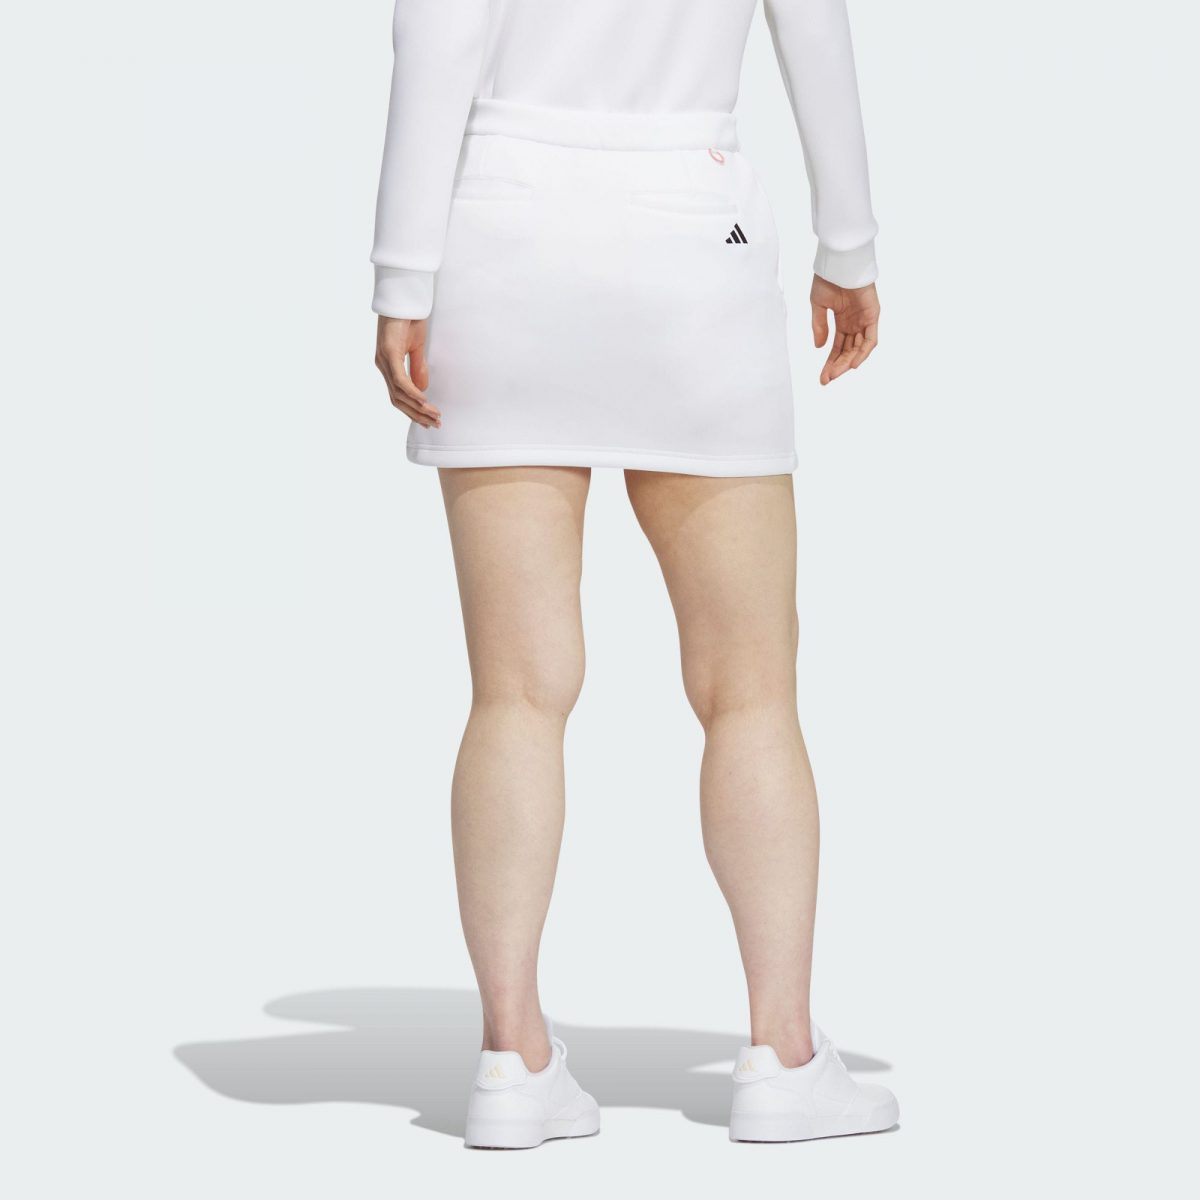 Женская юбка adidas 3D DEBOSSED SPACER KNIT SKIRT Белая фотография